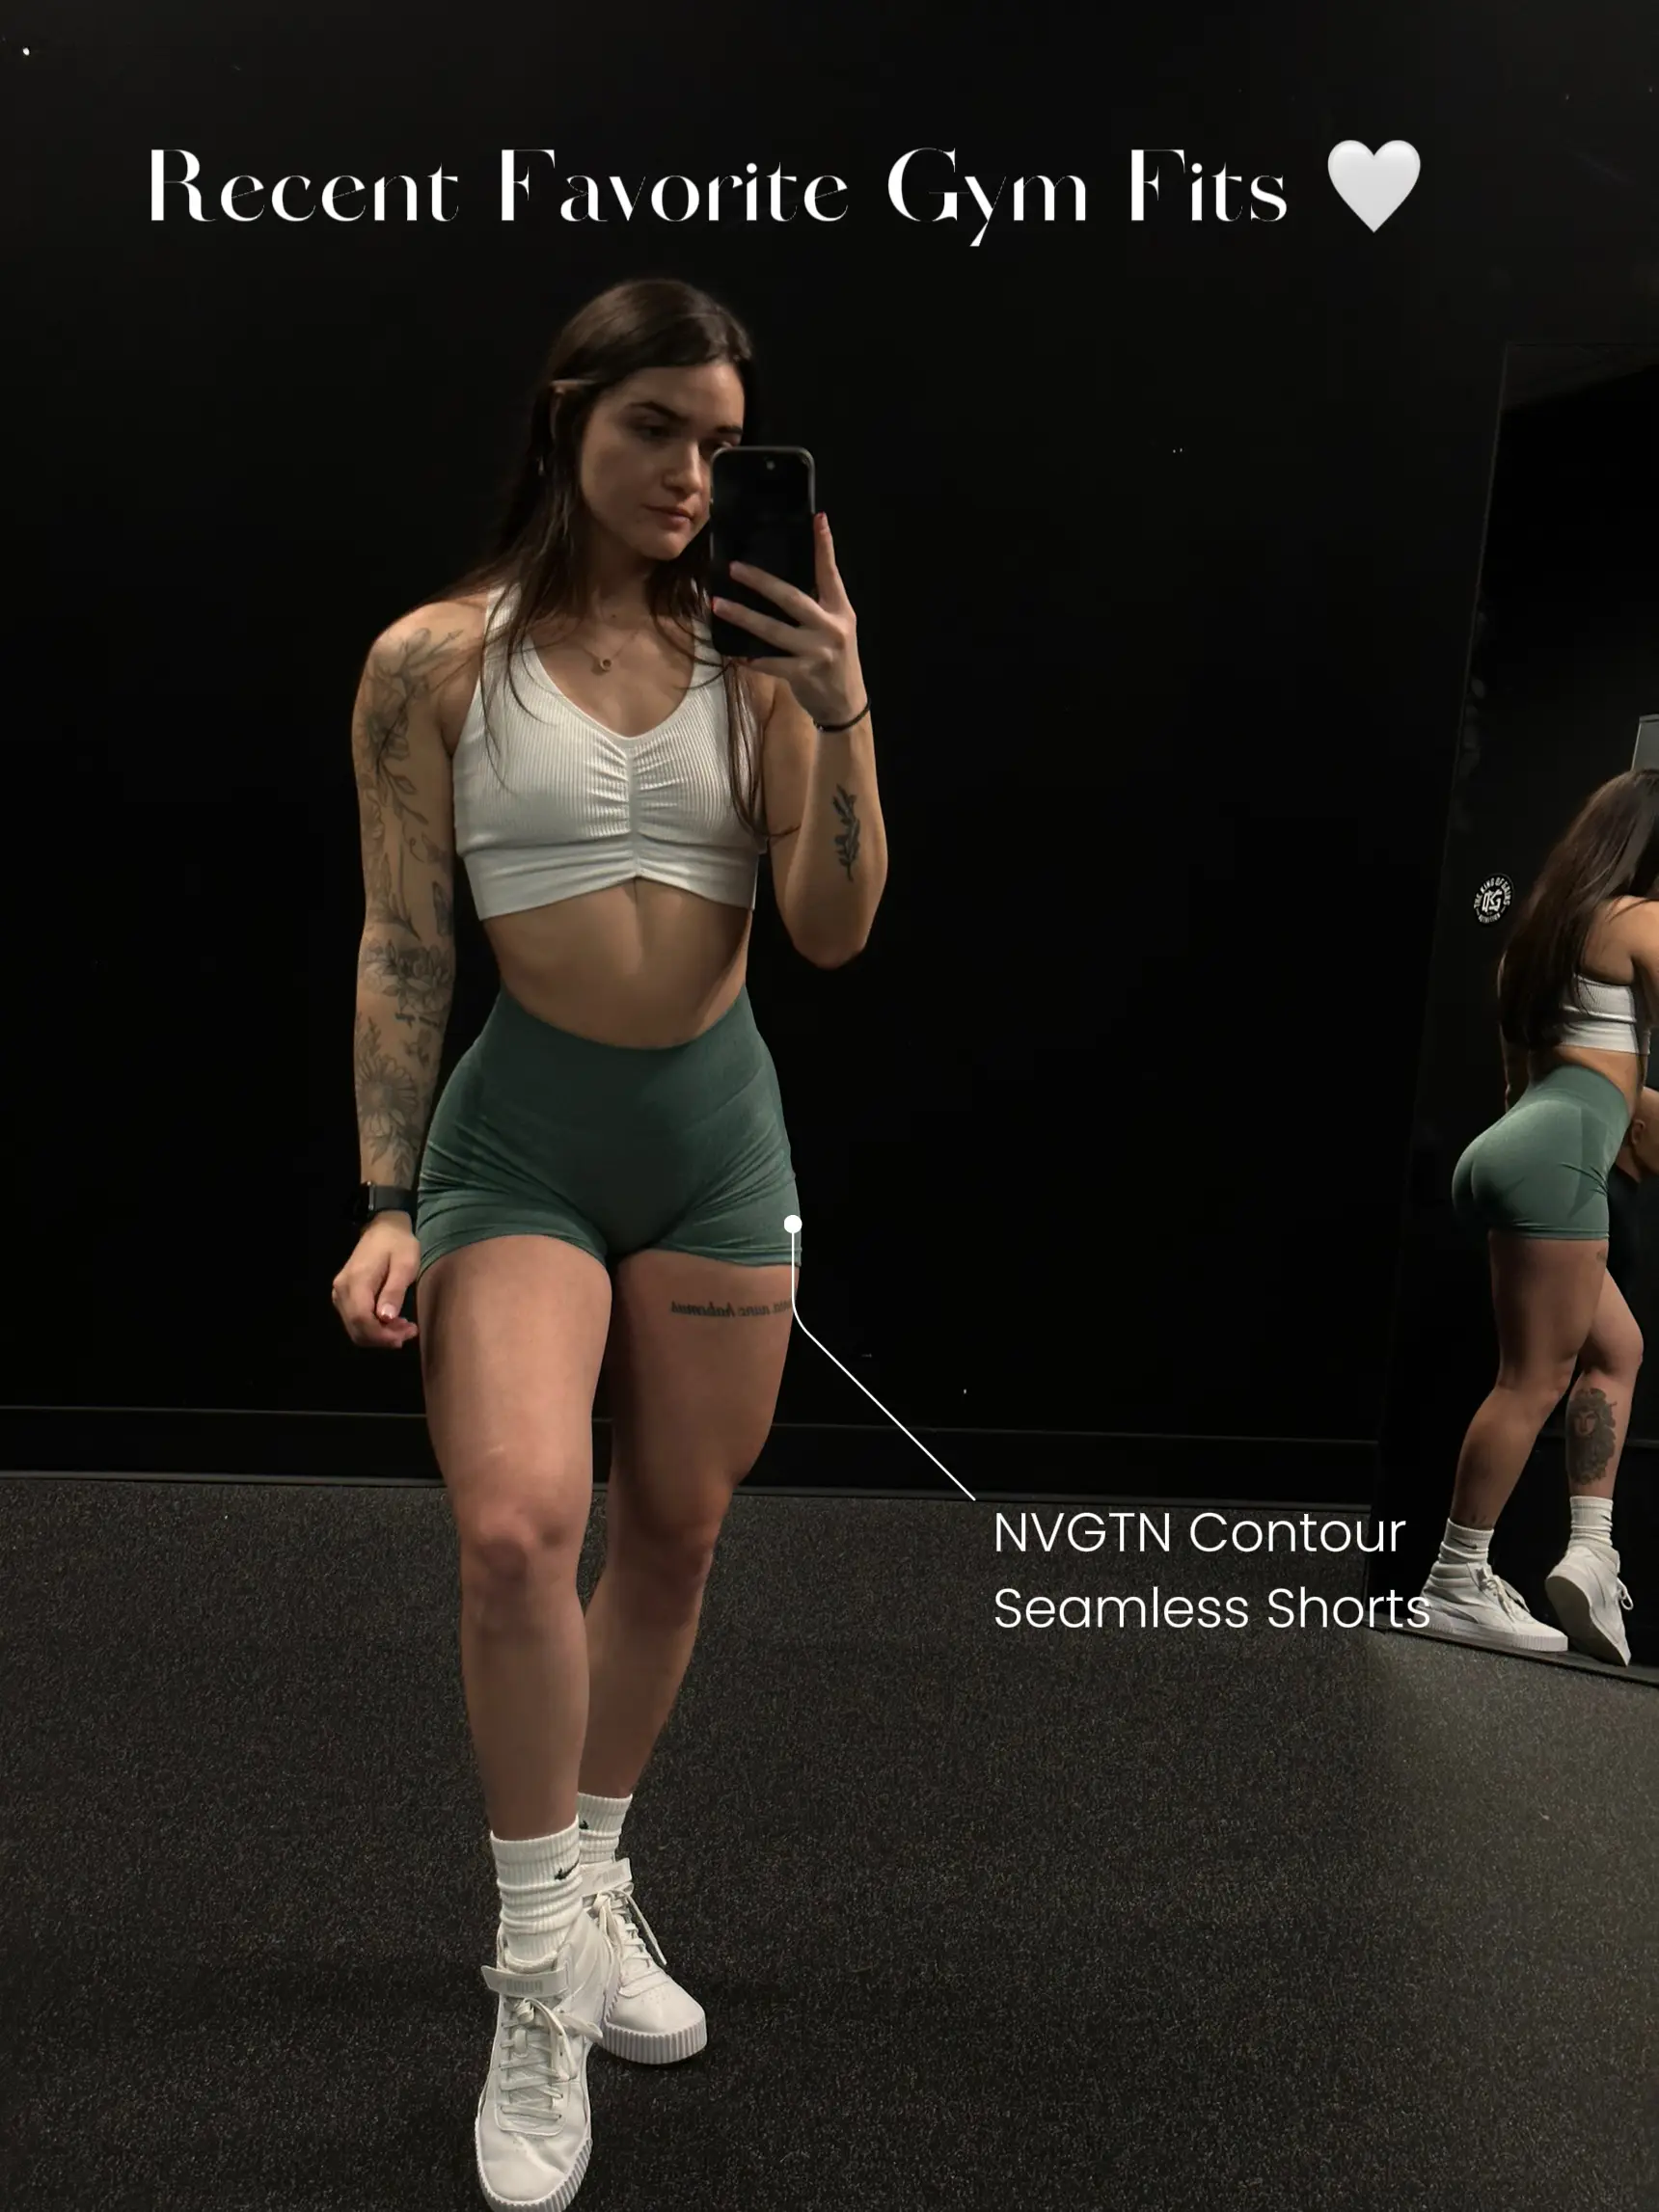 NVGTN Contour Seamless Shorts - Black Speckled